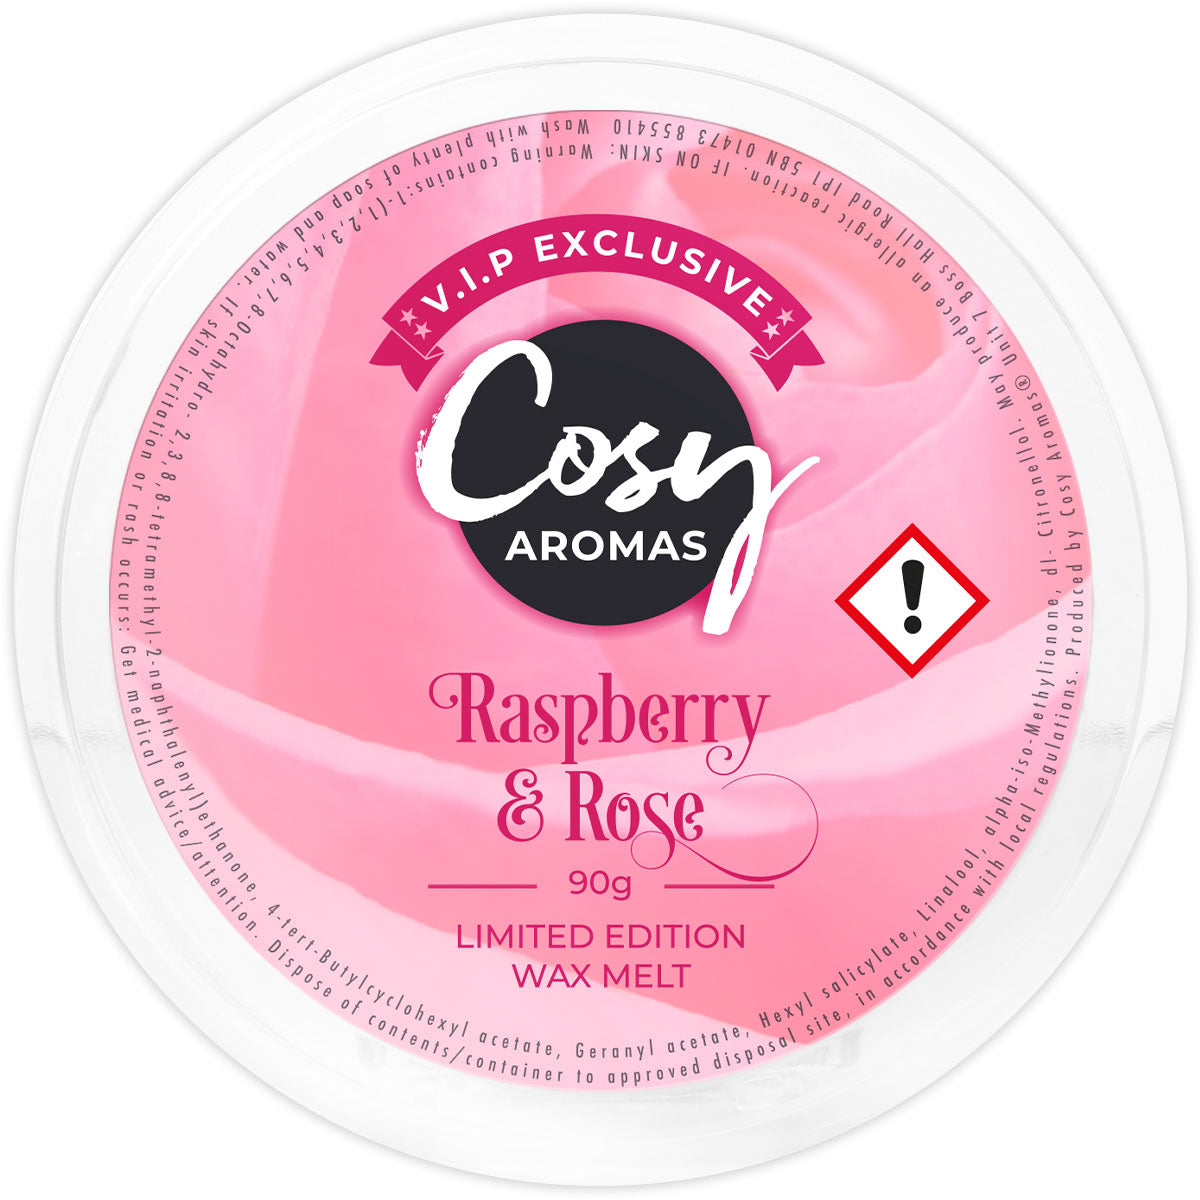 Raspberry & Rose VIP Exclusive Wax Melt.